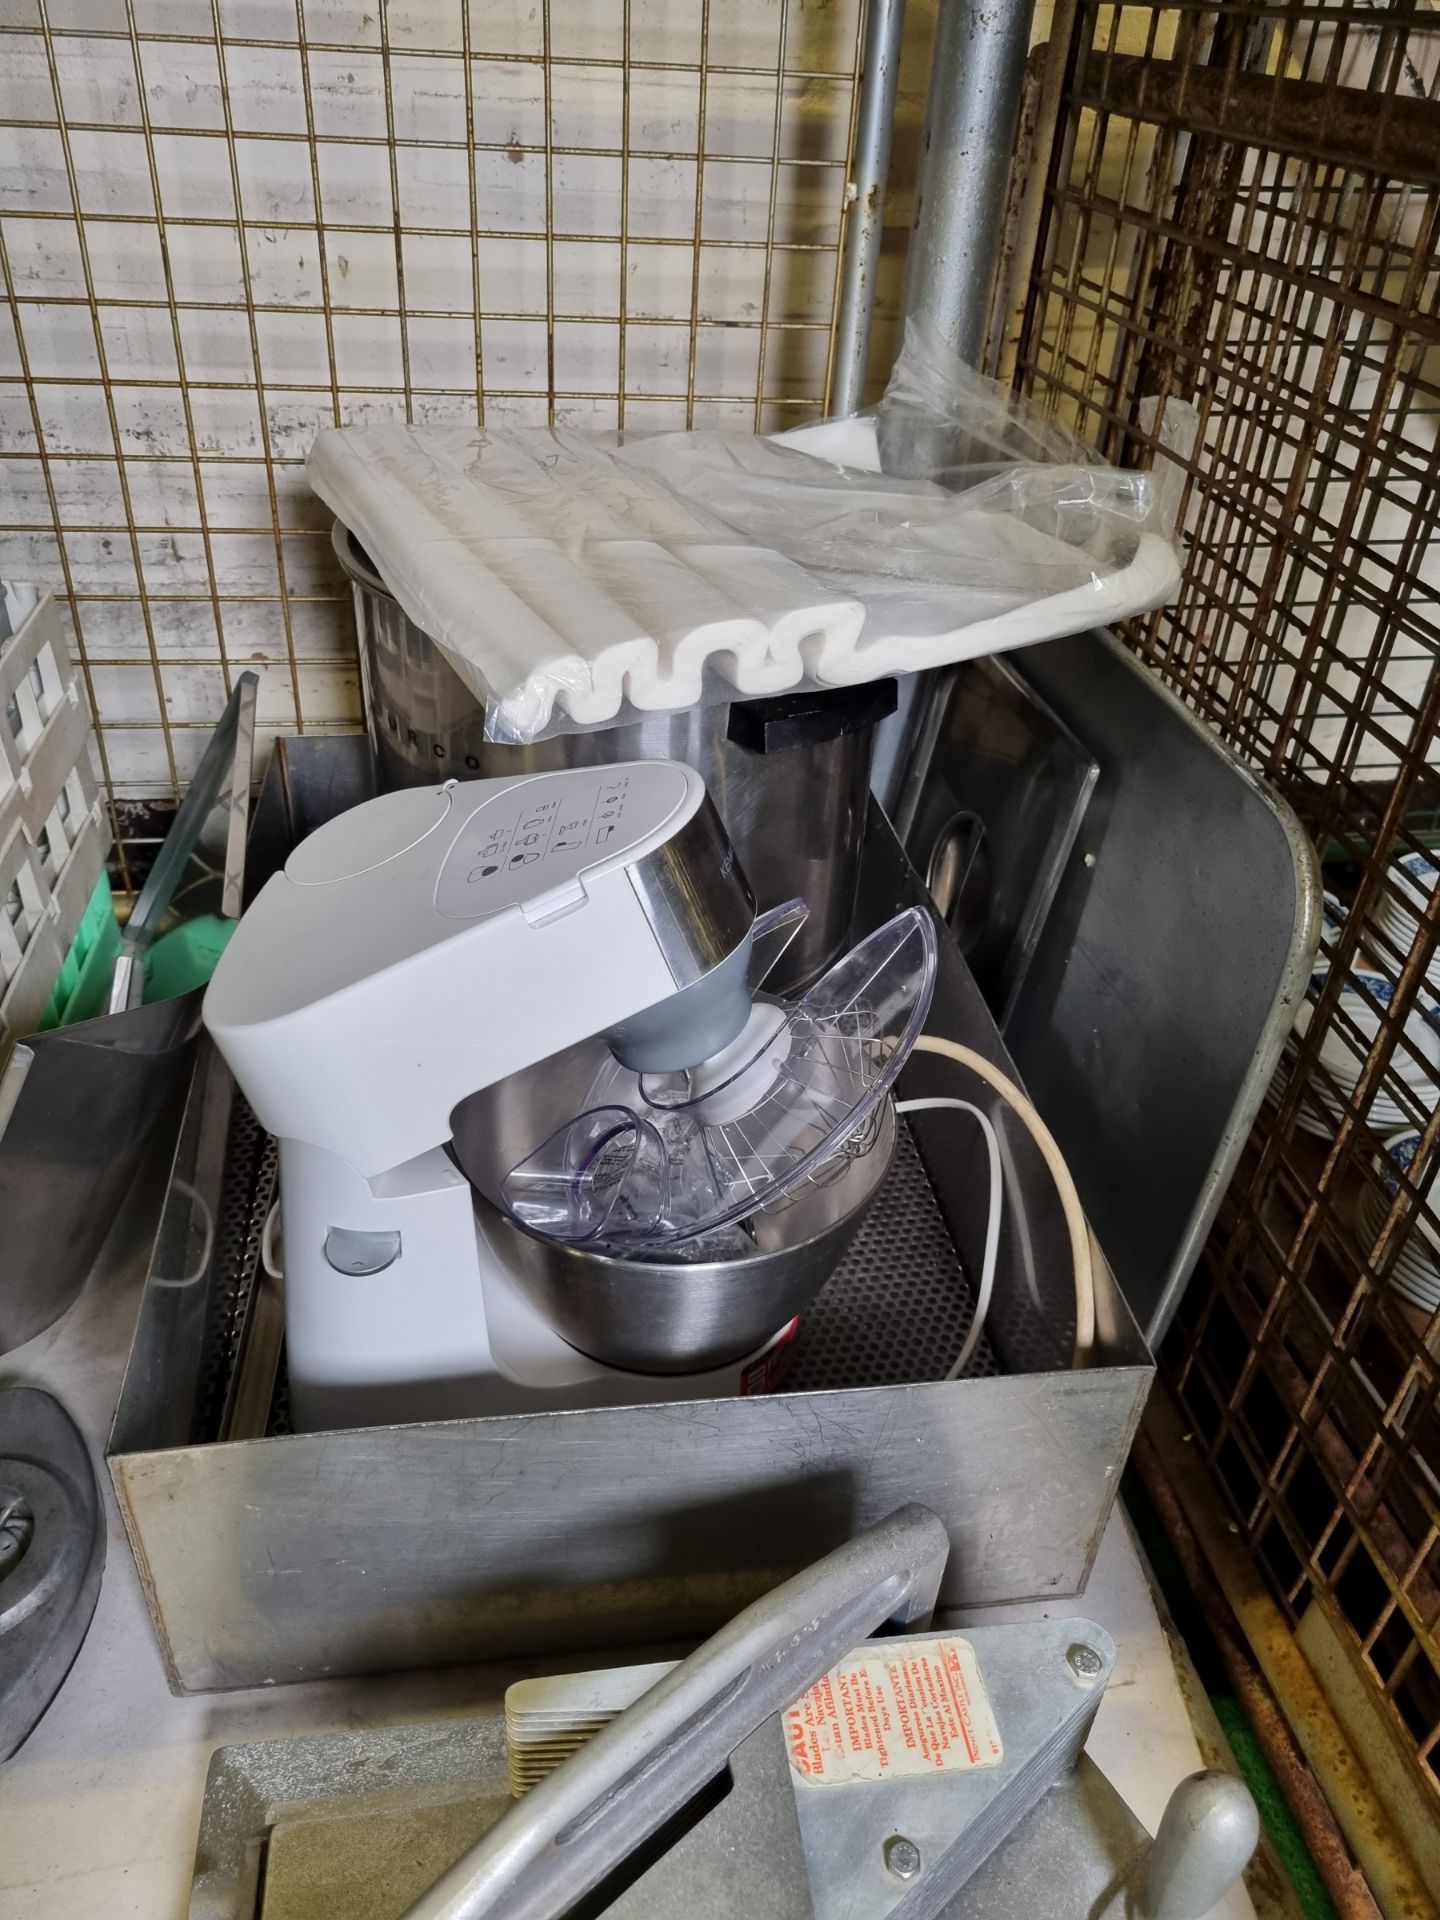 Catering equipment - dishwasher trays, food steamers, small mixer, tomato slicer, blender jug - Bild 4 aus 7